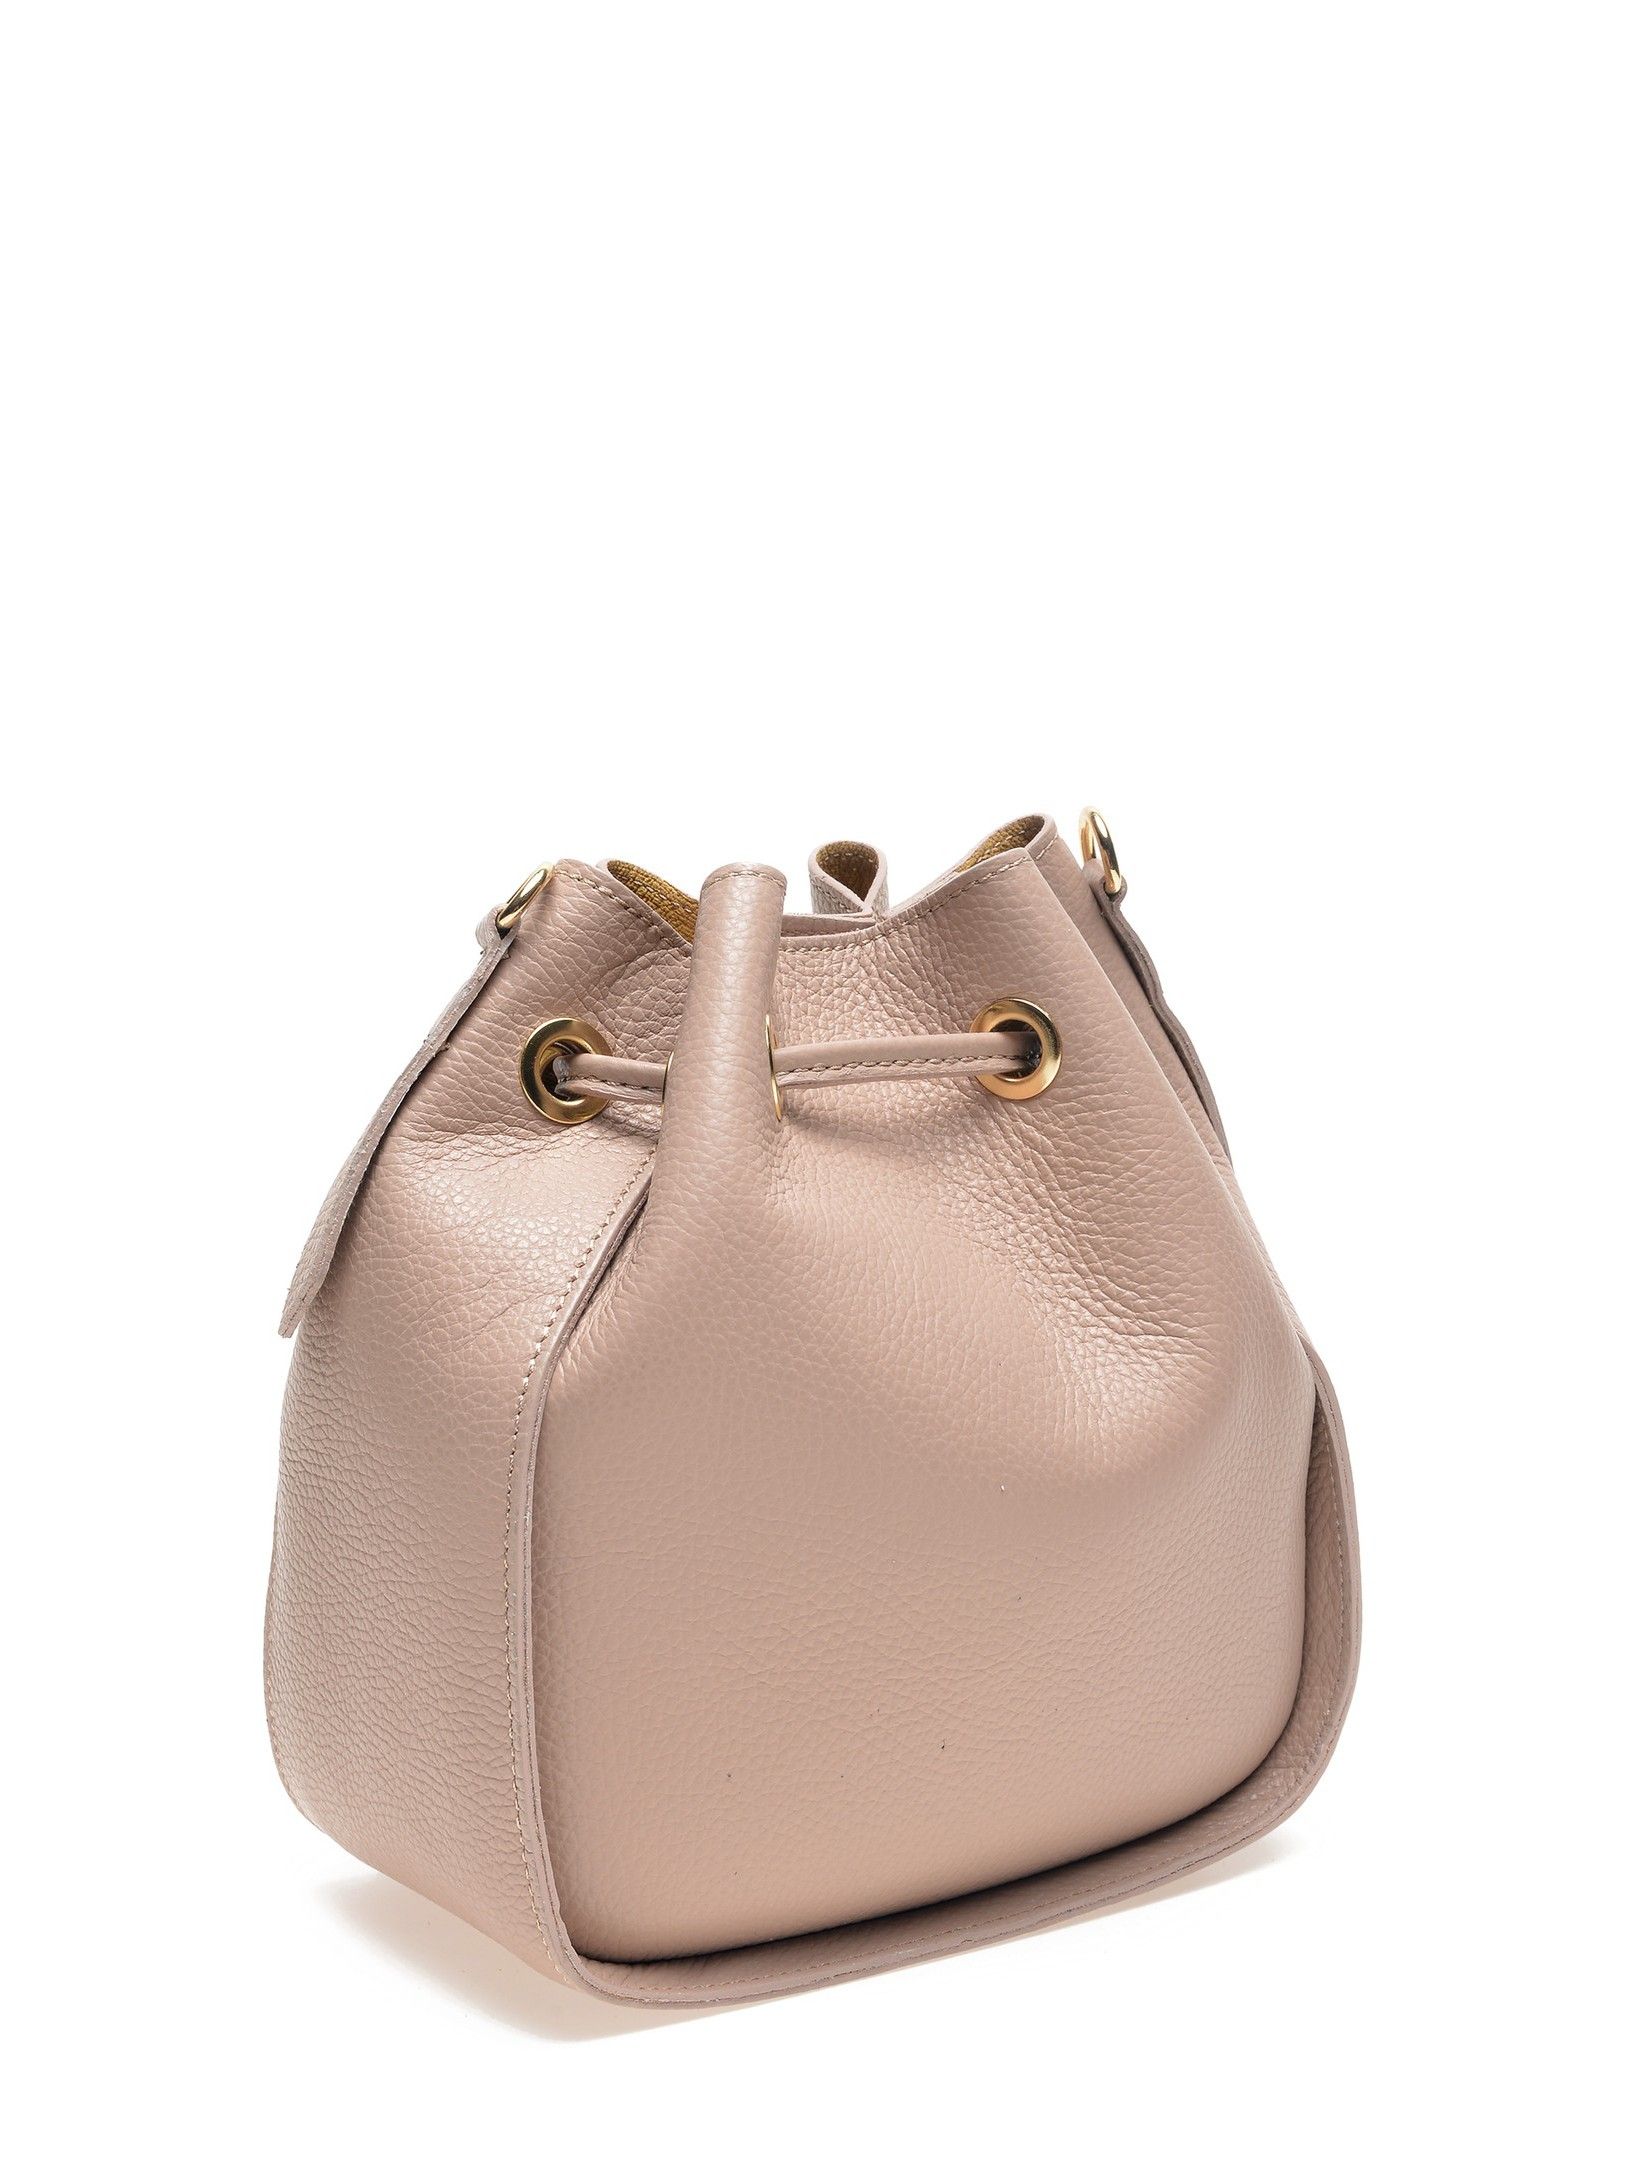 Shoulder Bag
100% cow leather
Top drawstring closure with tassel
Shoulder strap: 120 cm
Dimensions (L): 23.5x24x11 cm